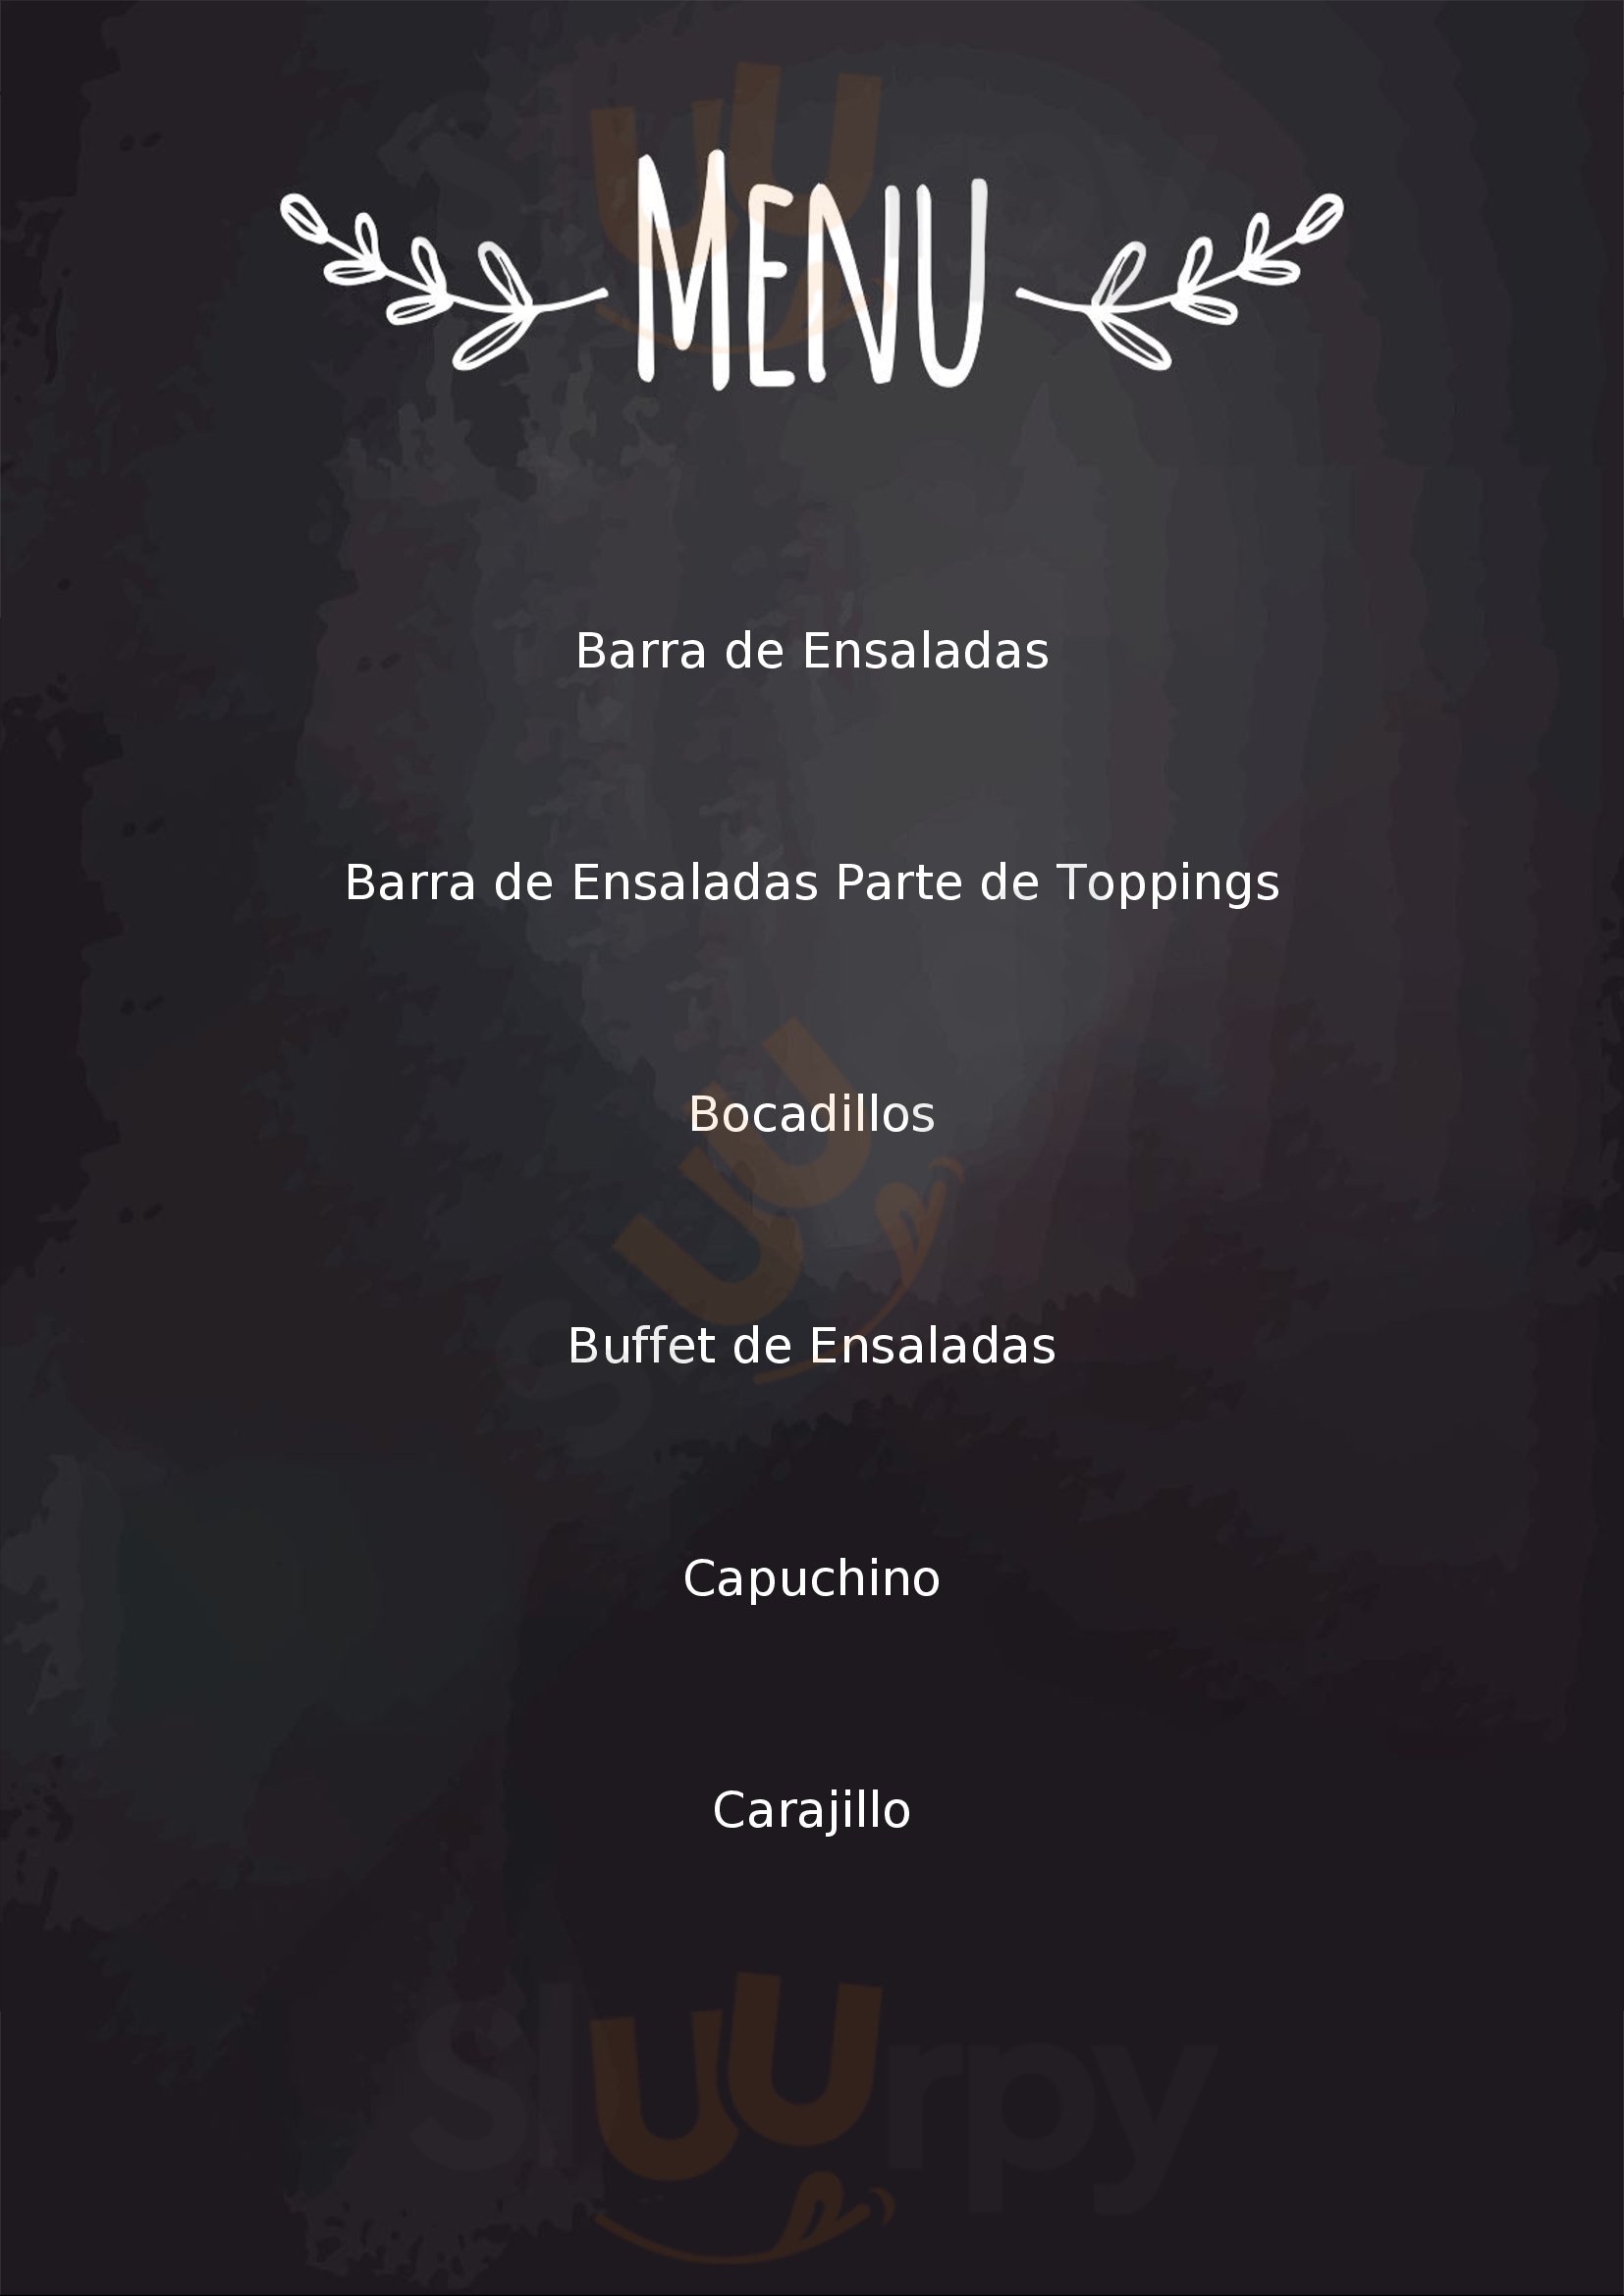 Las Espadas - Brazilian Steakhouse Chihuahua Menu - 1